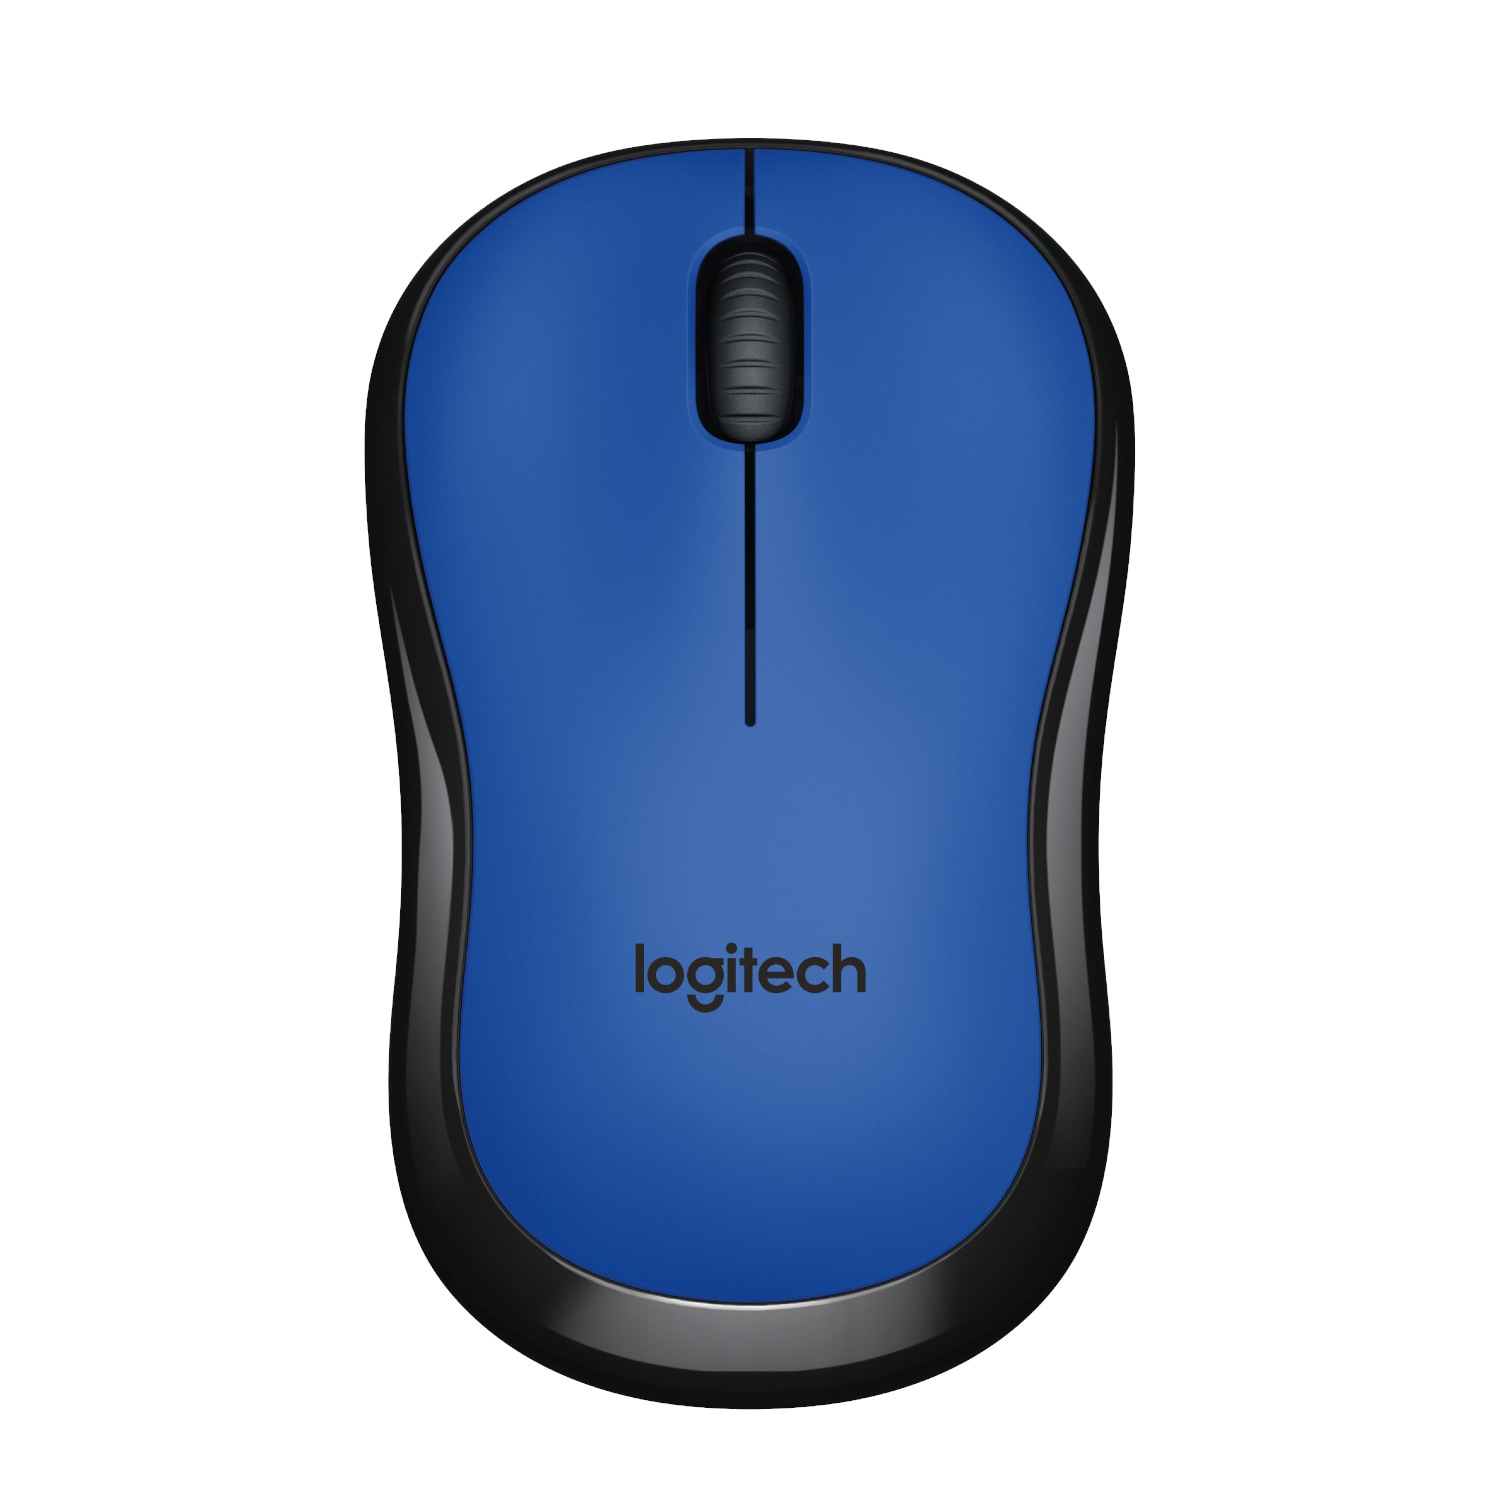 Logitech M220 Silent trådløs mus - blå - Mus og tastatur - Elgiganten